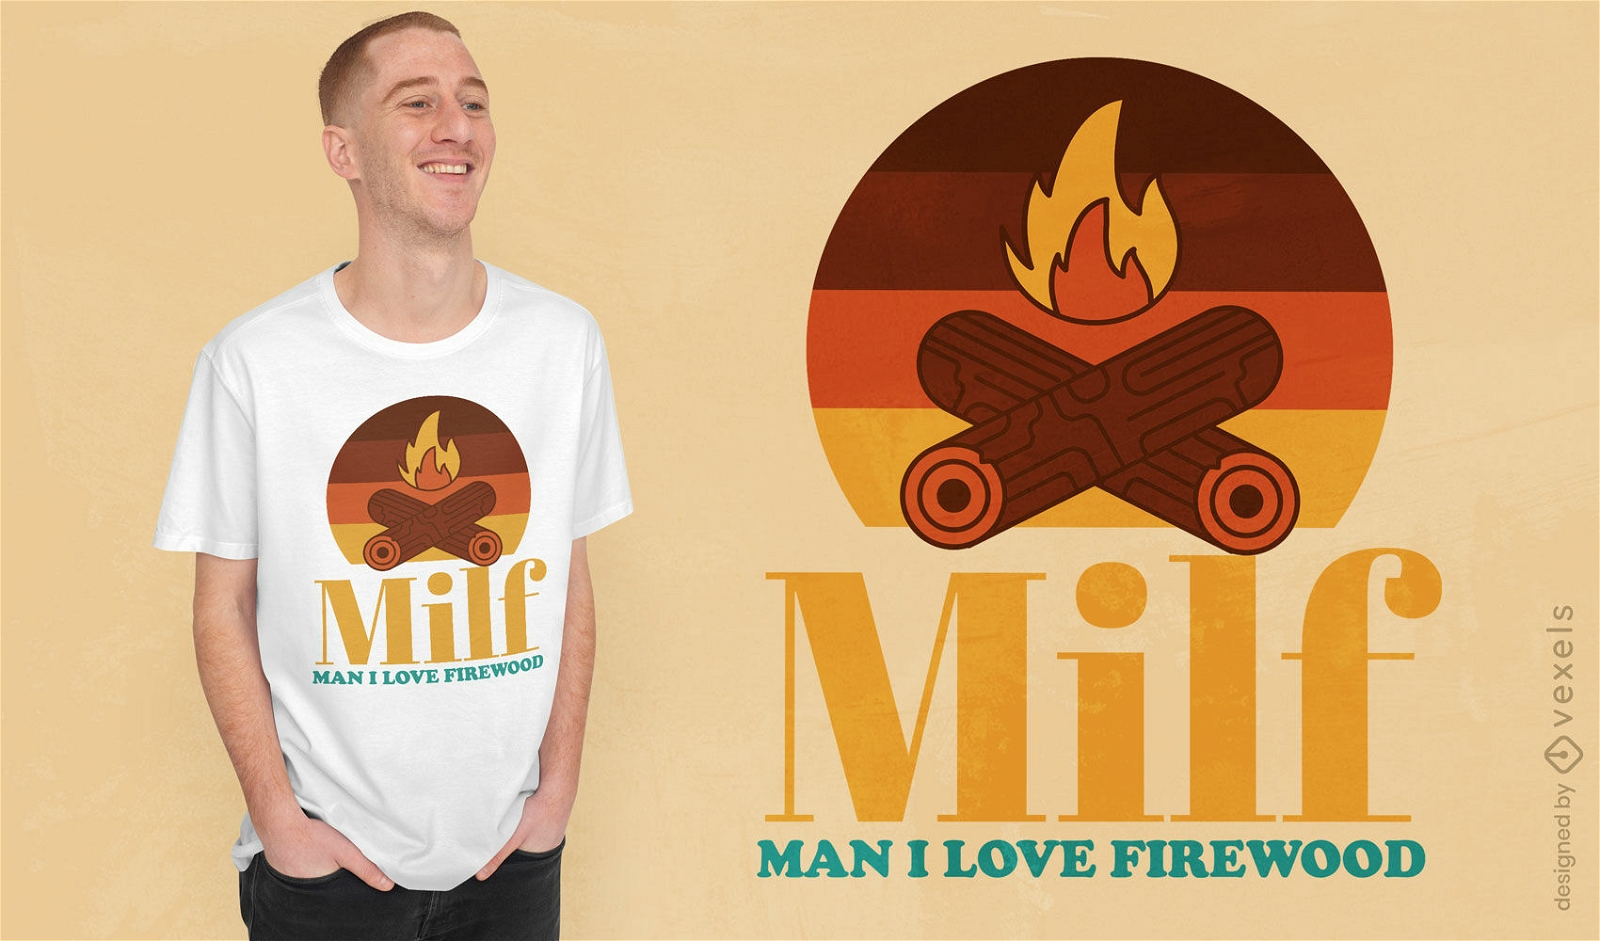 I love firewood MILF t-shirt design